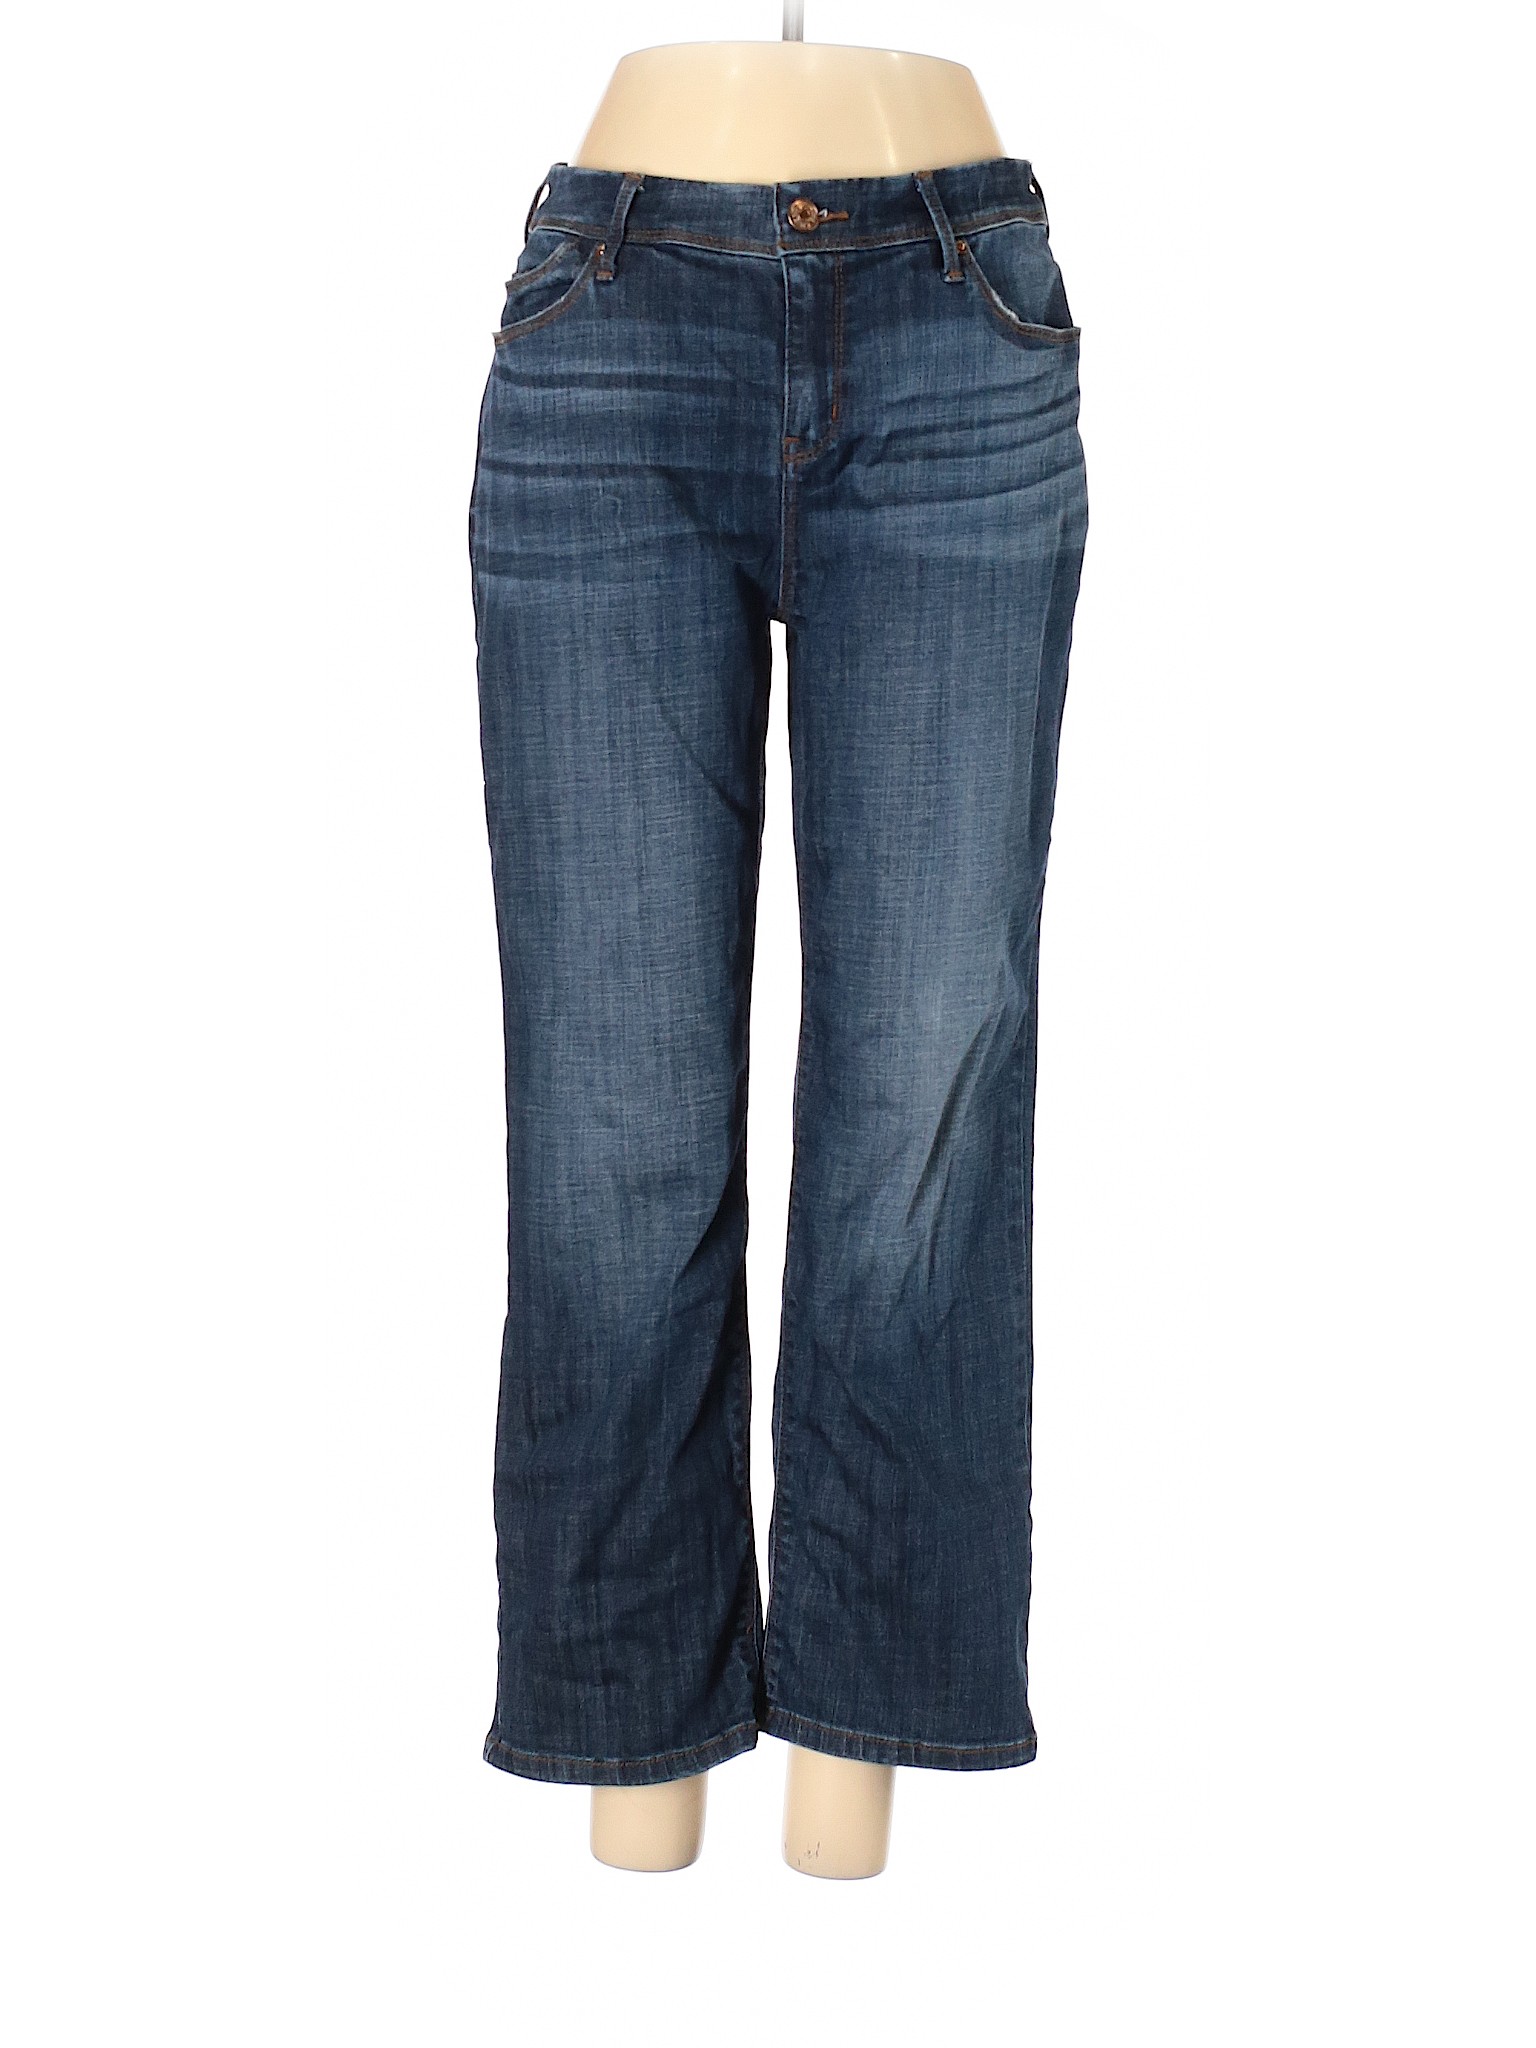 Chico's Blue Jeans Size Sm (0) - 90% off | thredUP